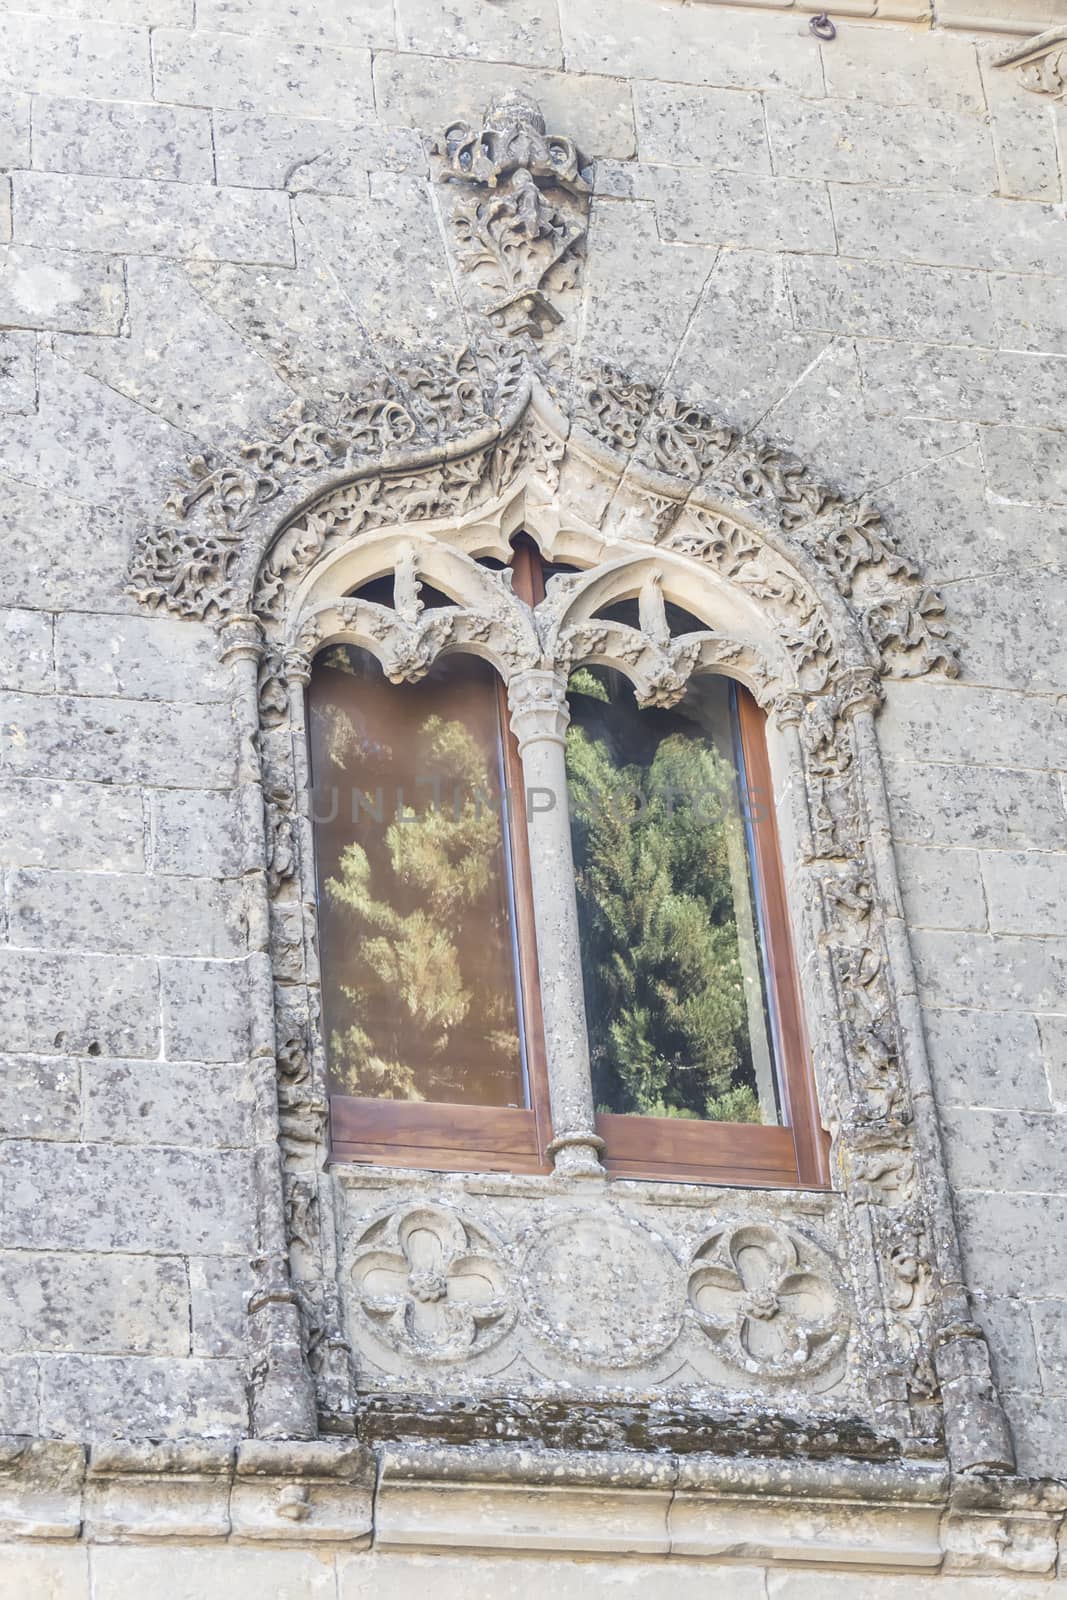 Baeza cathedral window detail, Jaen, Spain